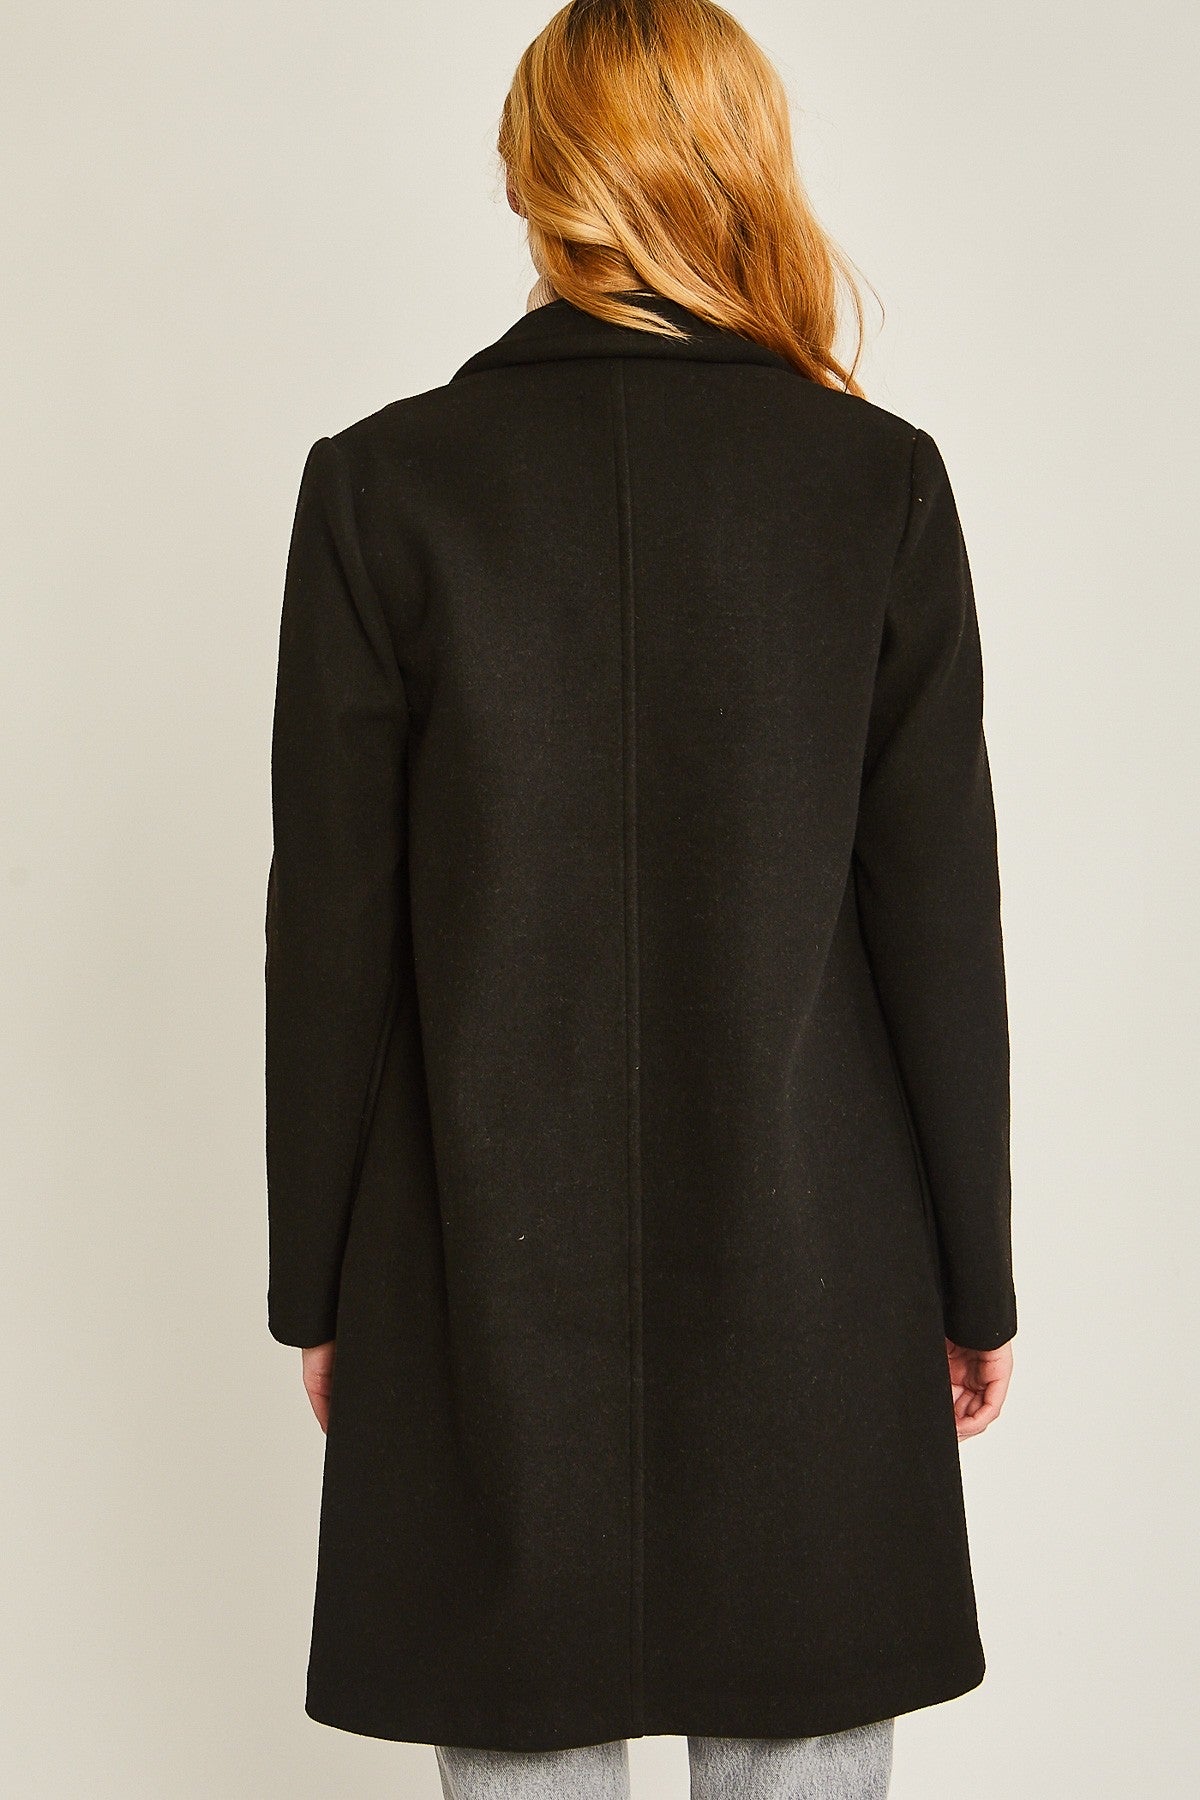 Emerson Longline Coat